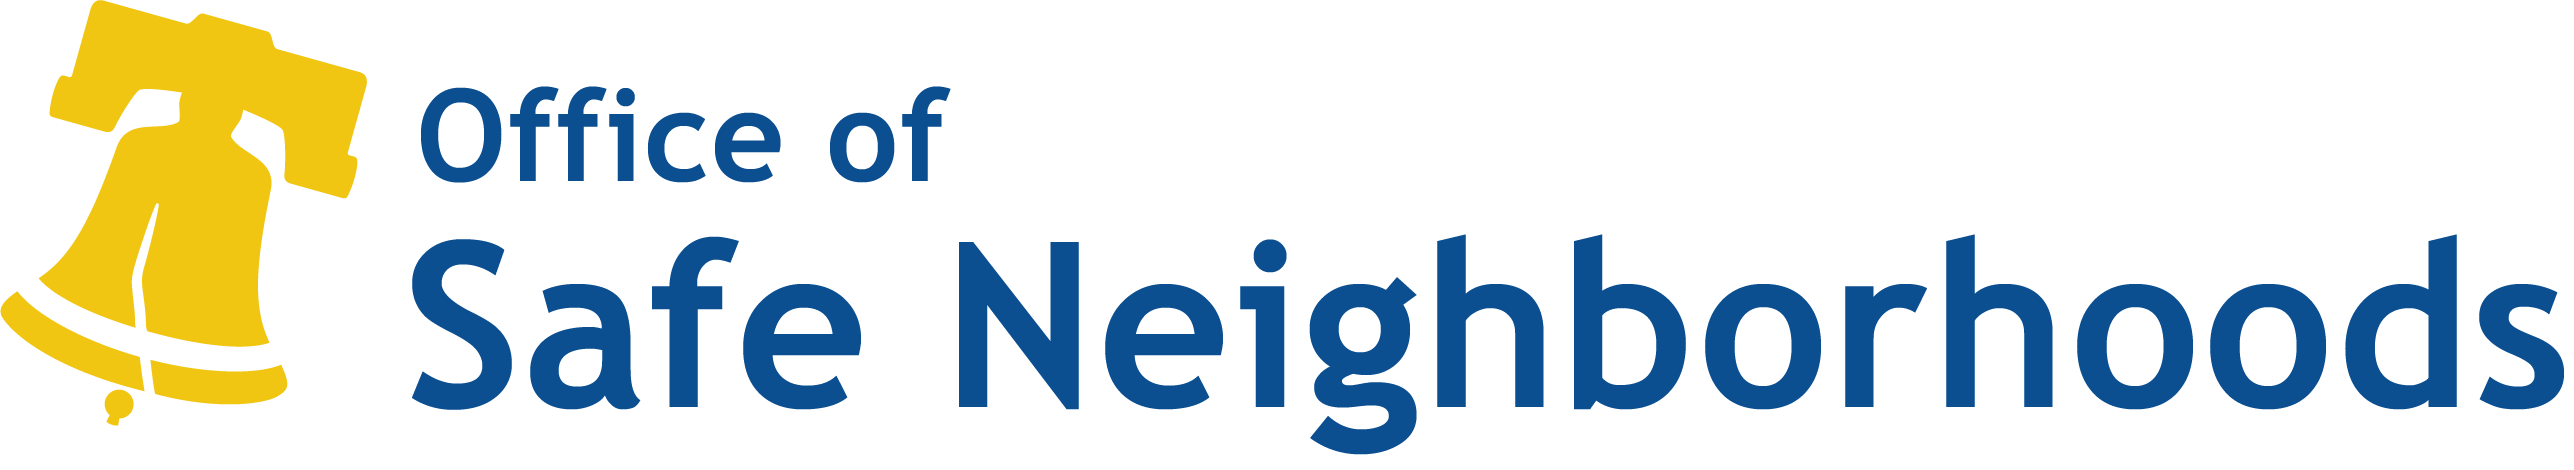 Office of Safe Neighborhoods logo